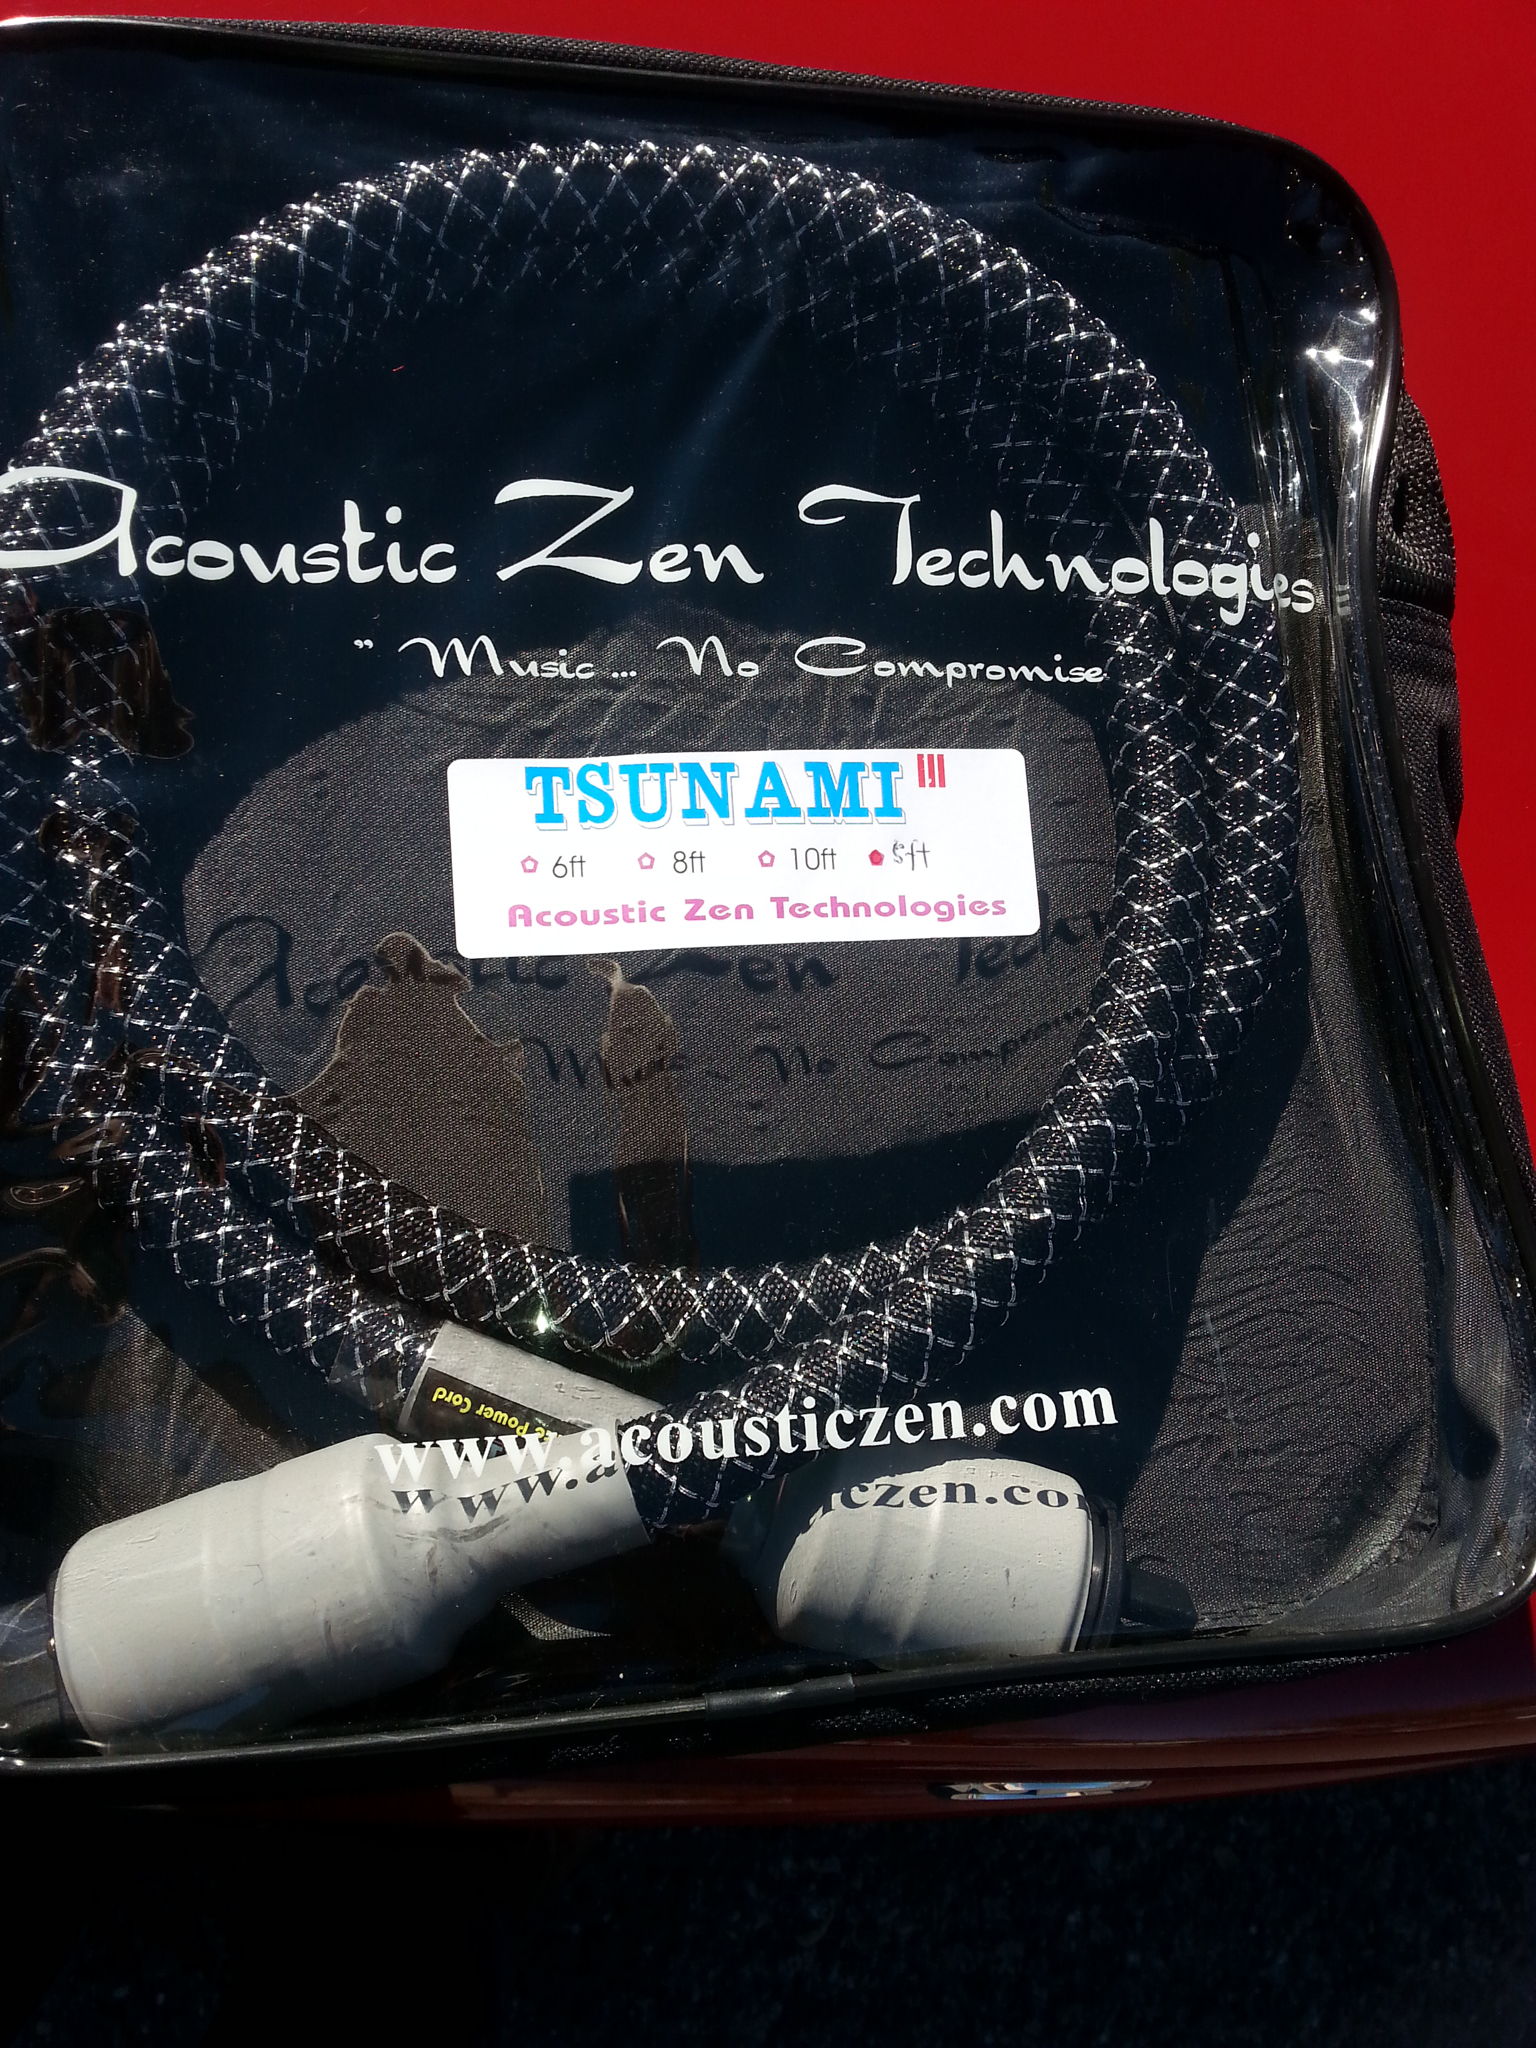 Acoustic Zen Tsunami III power cable demo with warranty...